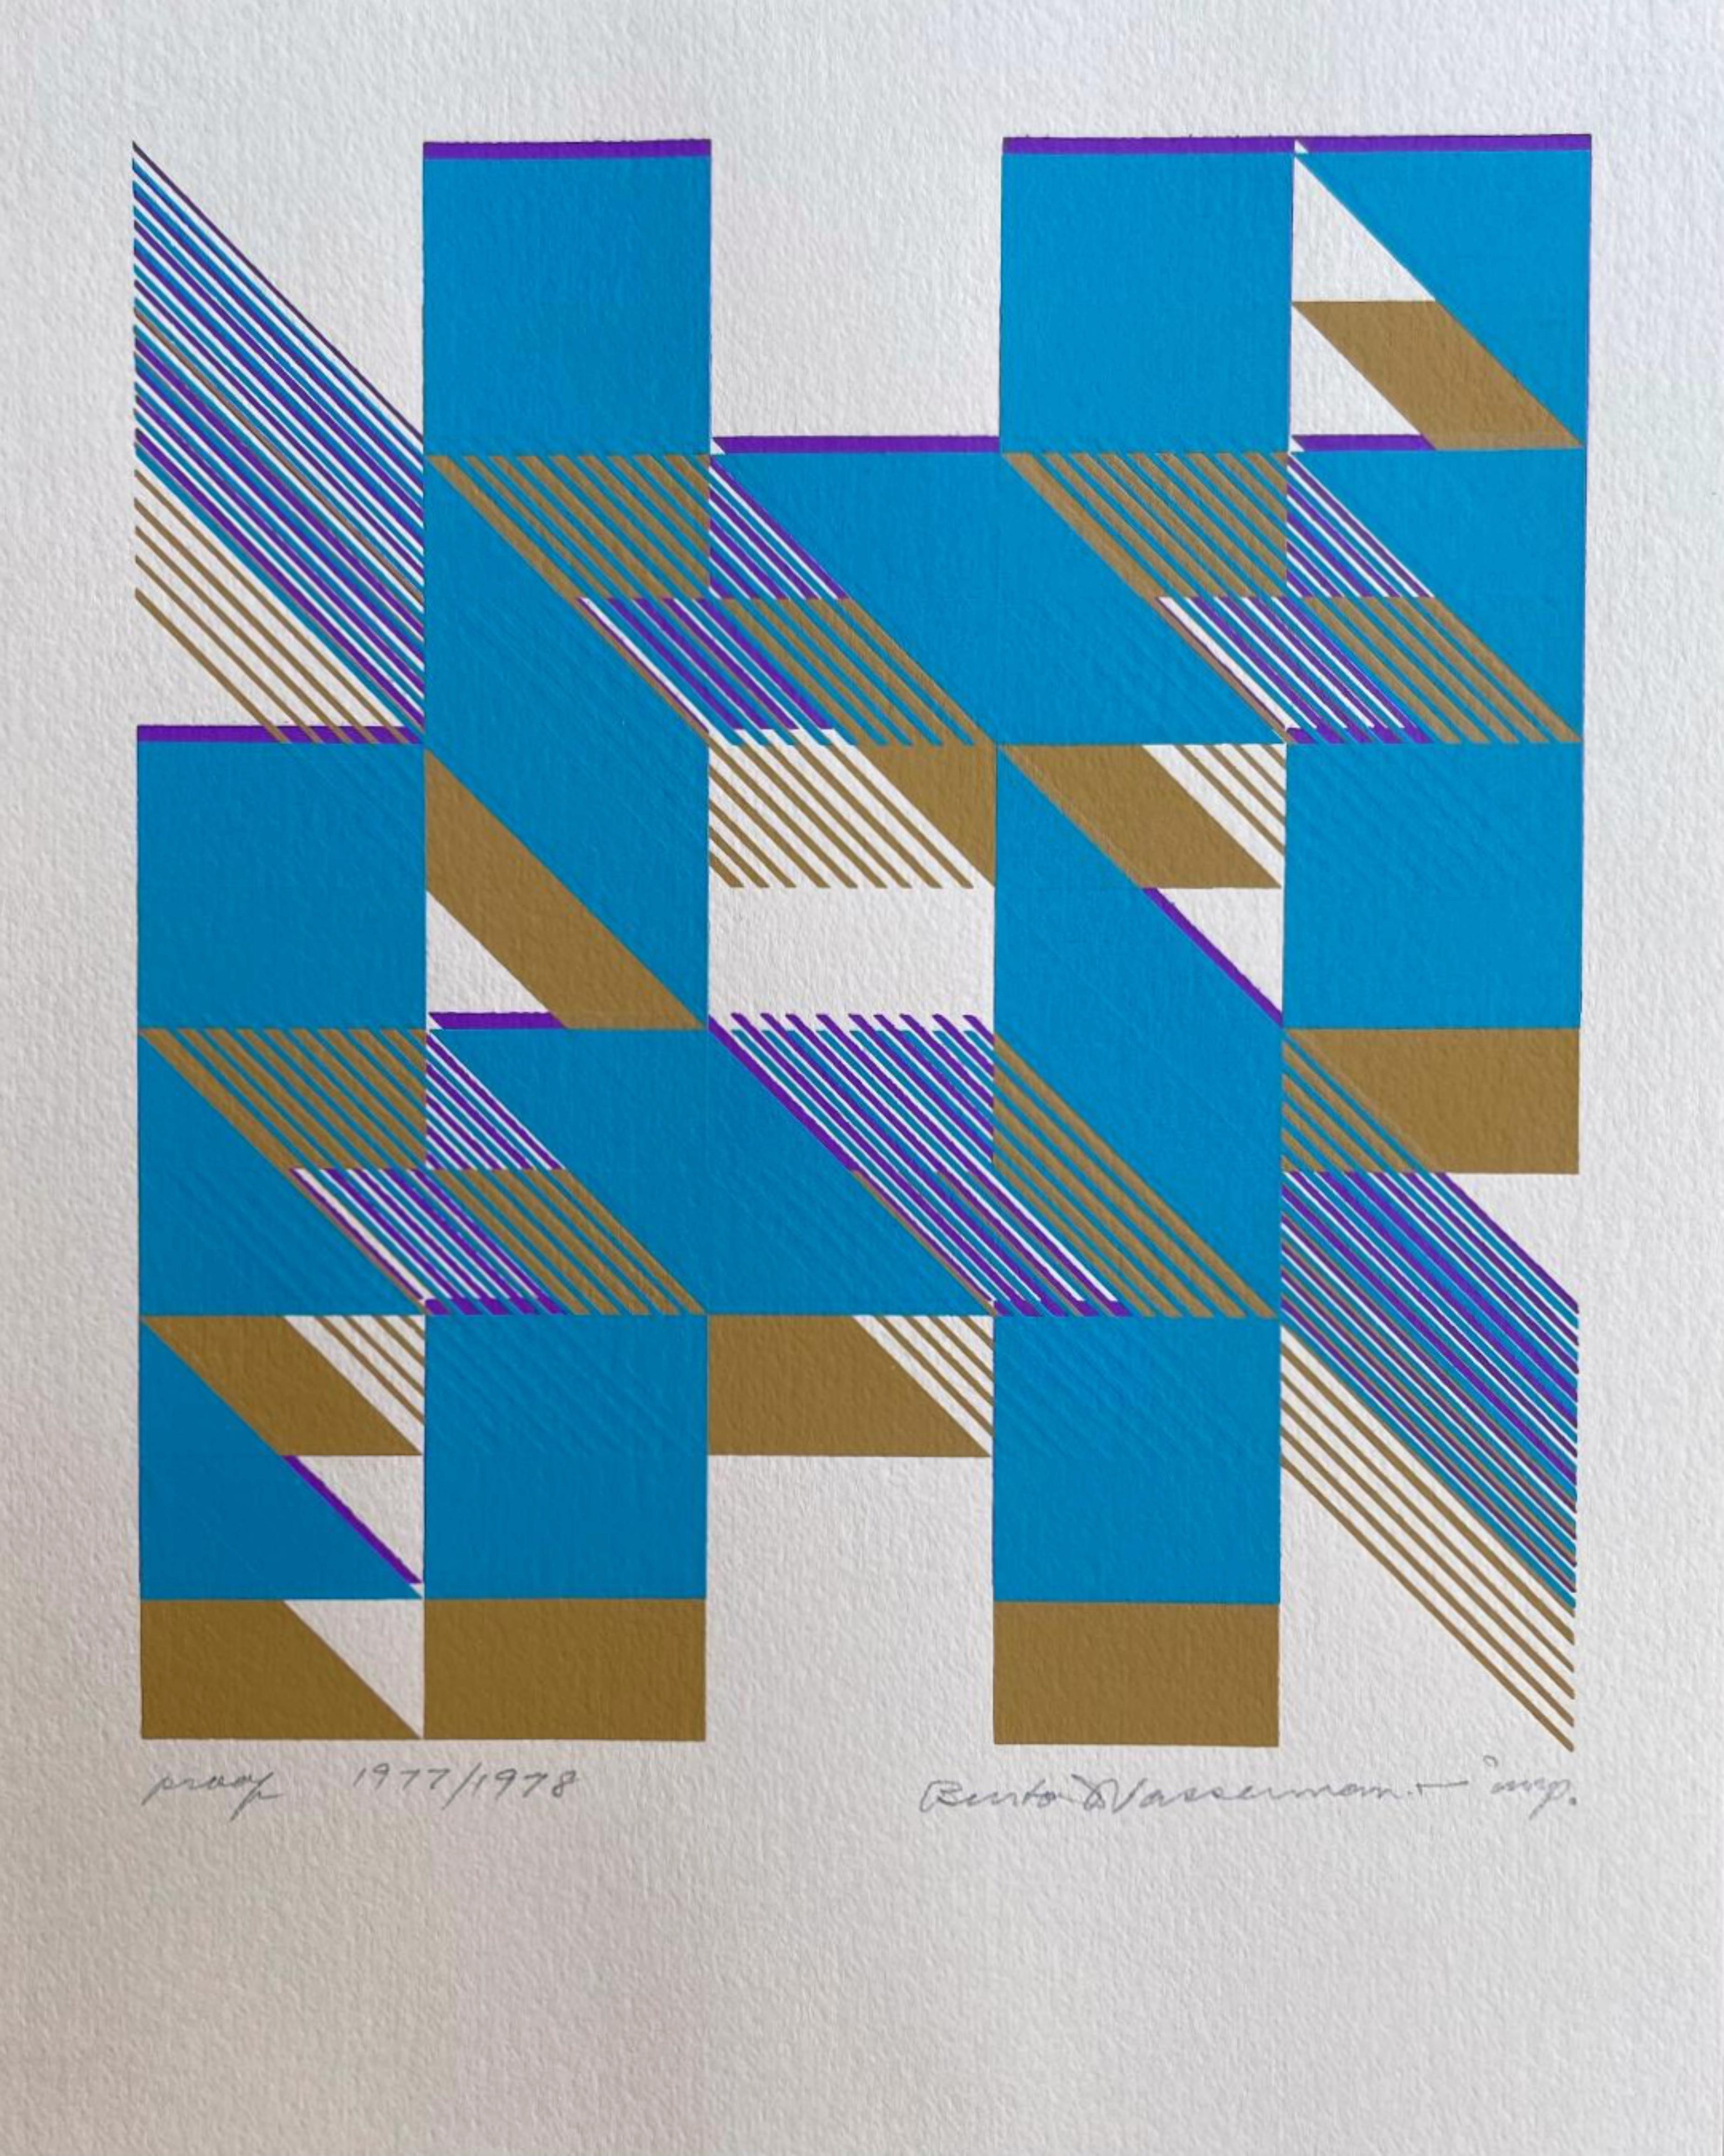 Burton Wasserman Abstract Print - Geometric Abstraction mid century modern protege of Ad Reinhardt Burgoyne Diller